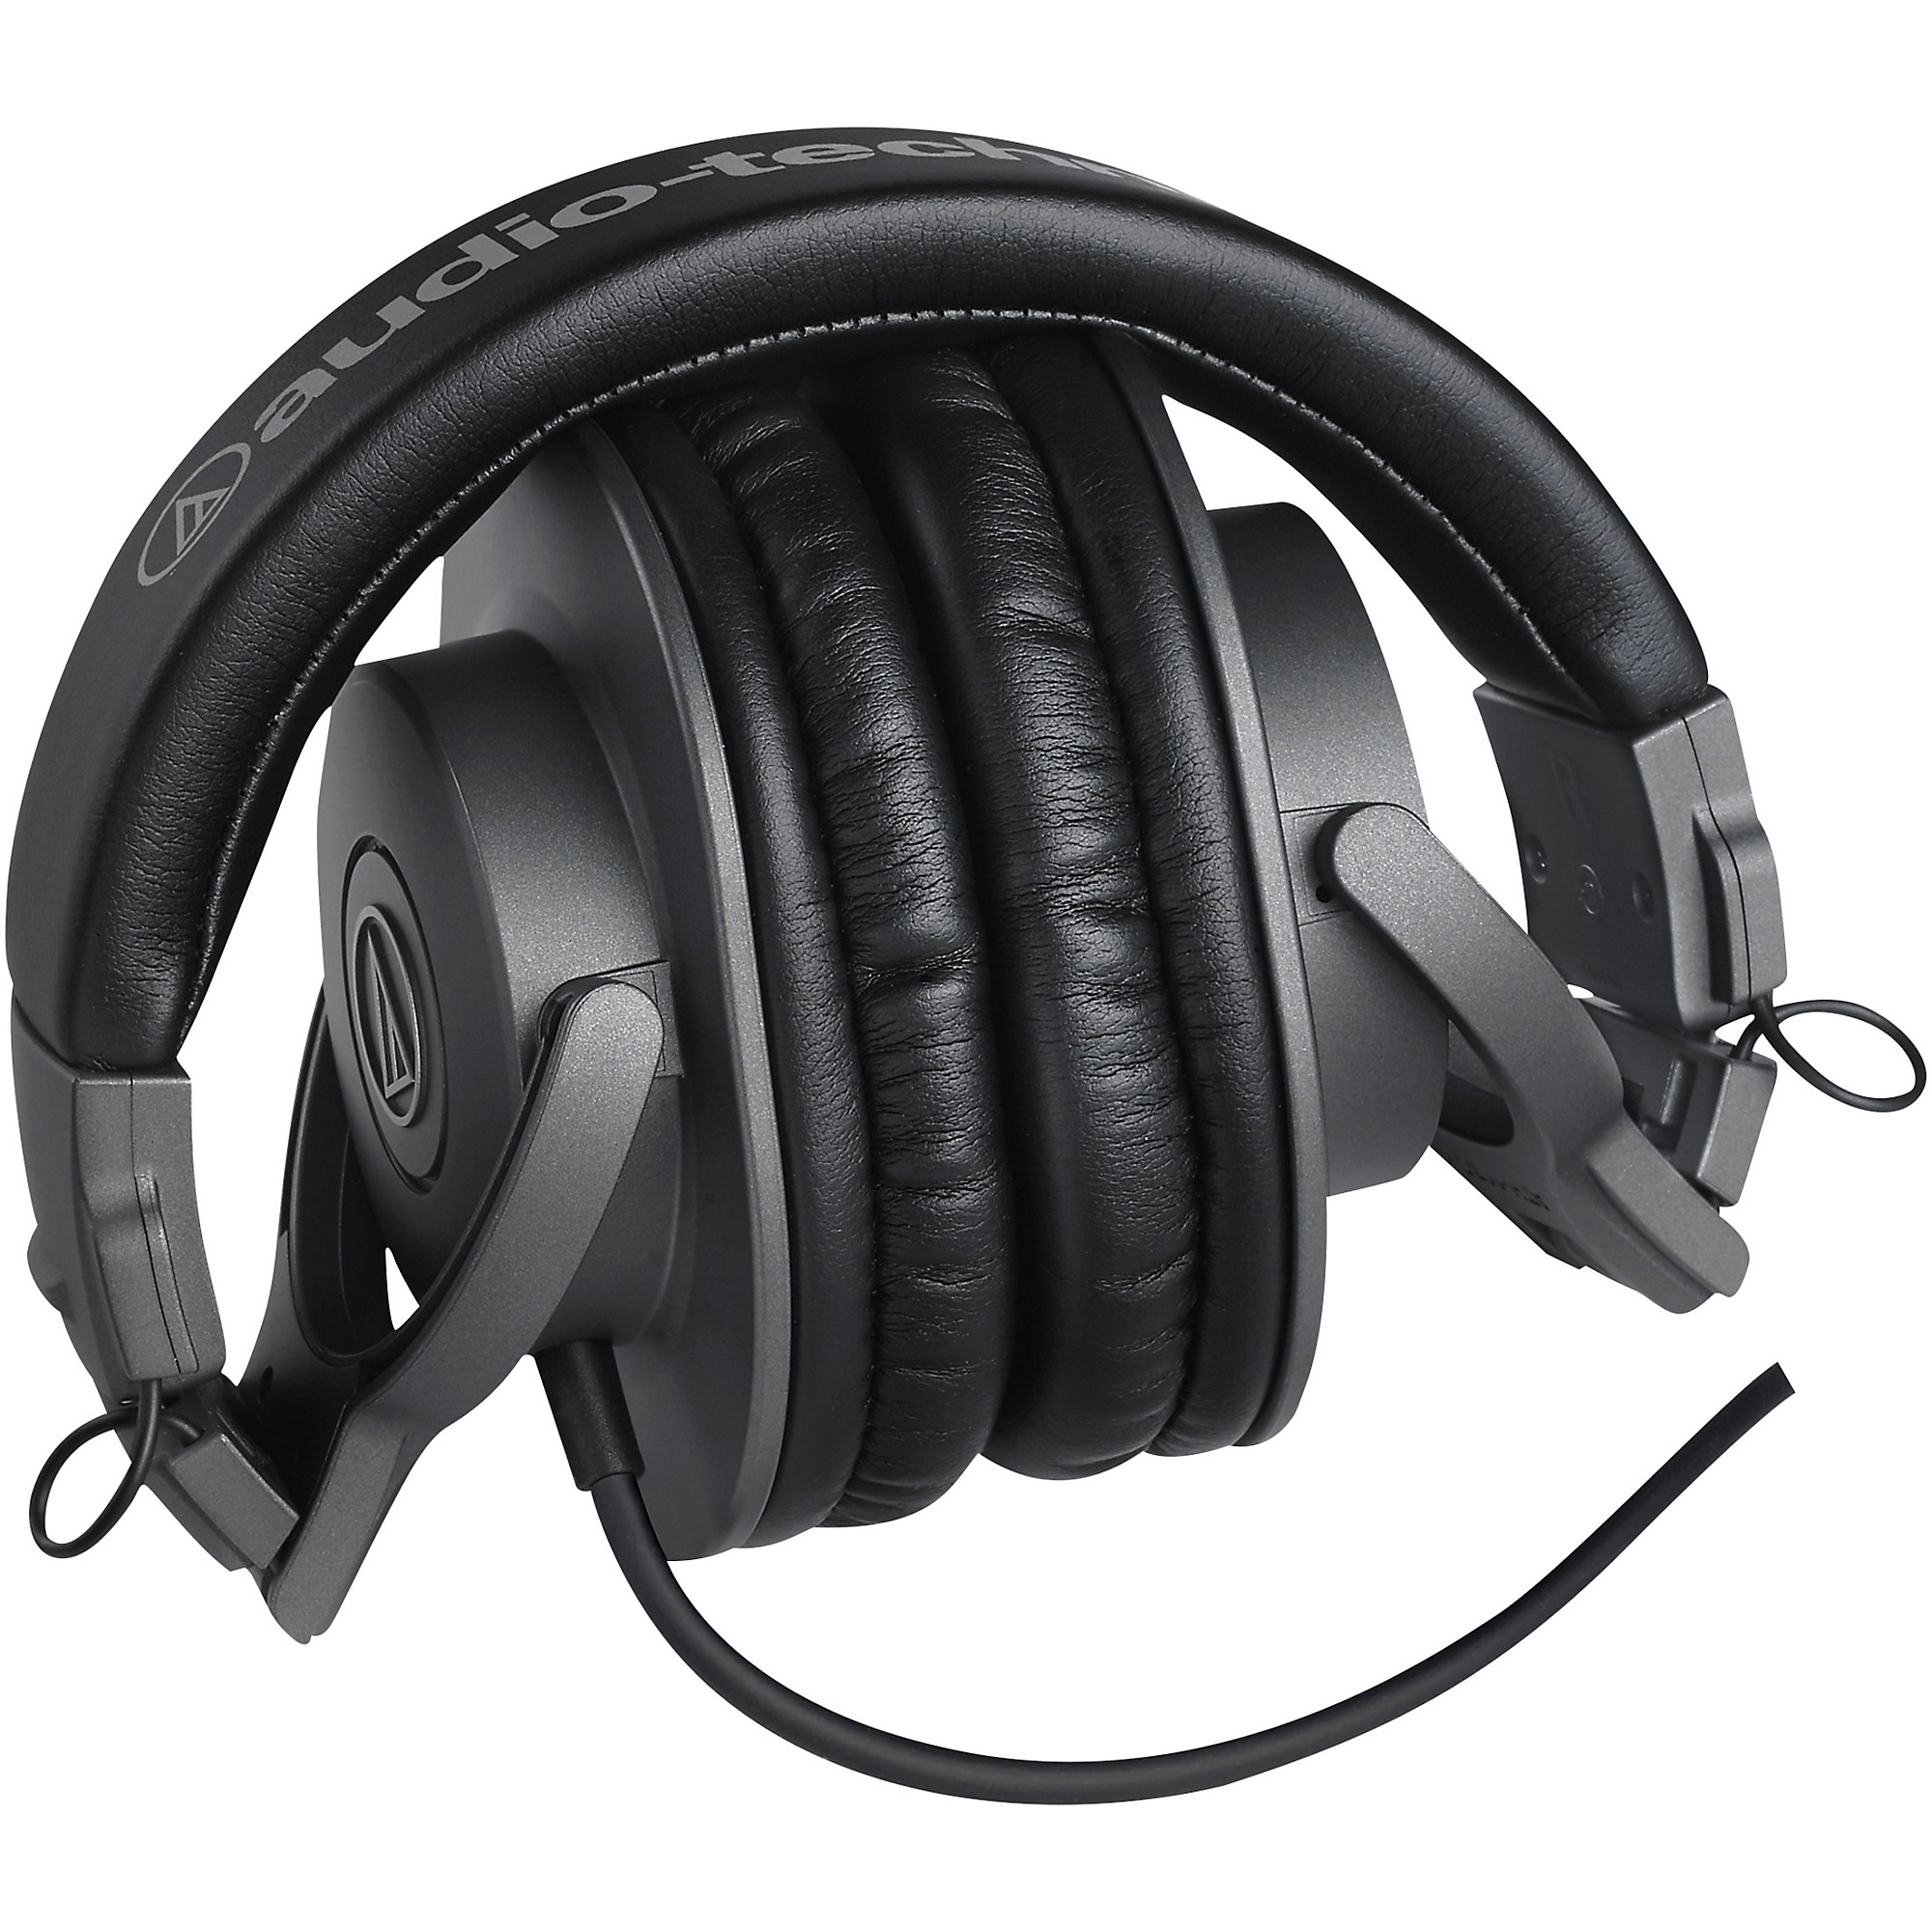 Audio-Technica ATH-M30X Professional Monitor Headphones